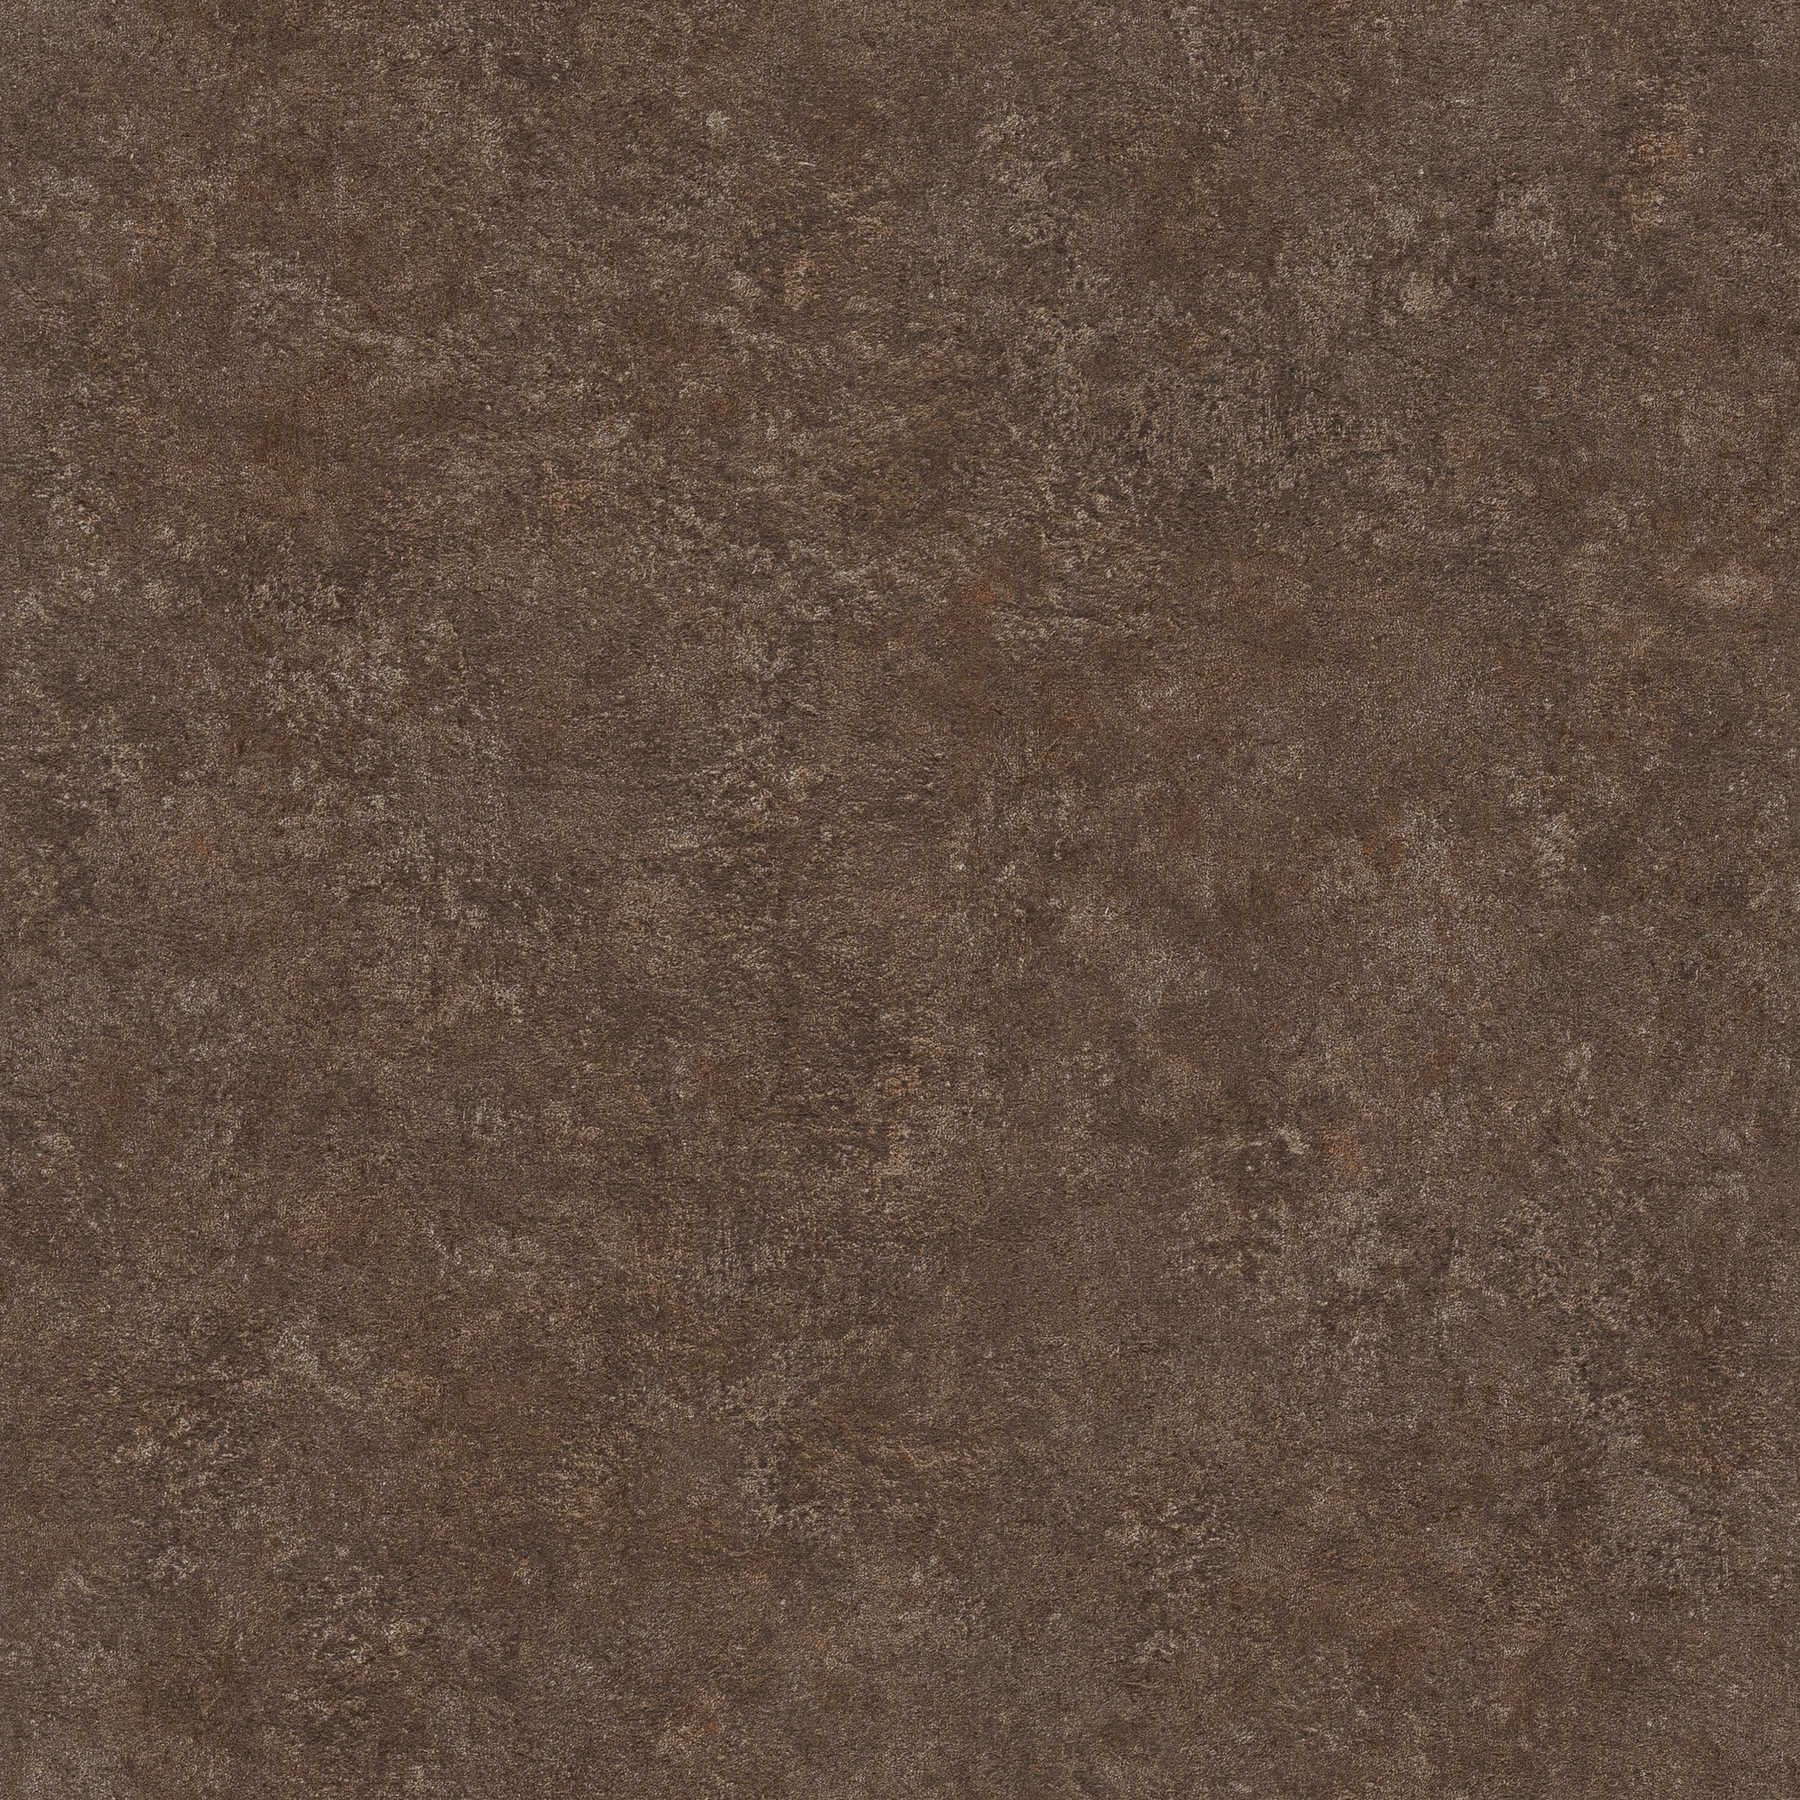         Non-woven wallpaper metal optics rust in used look - brown, grey
    